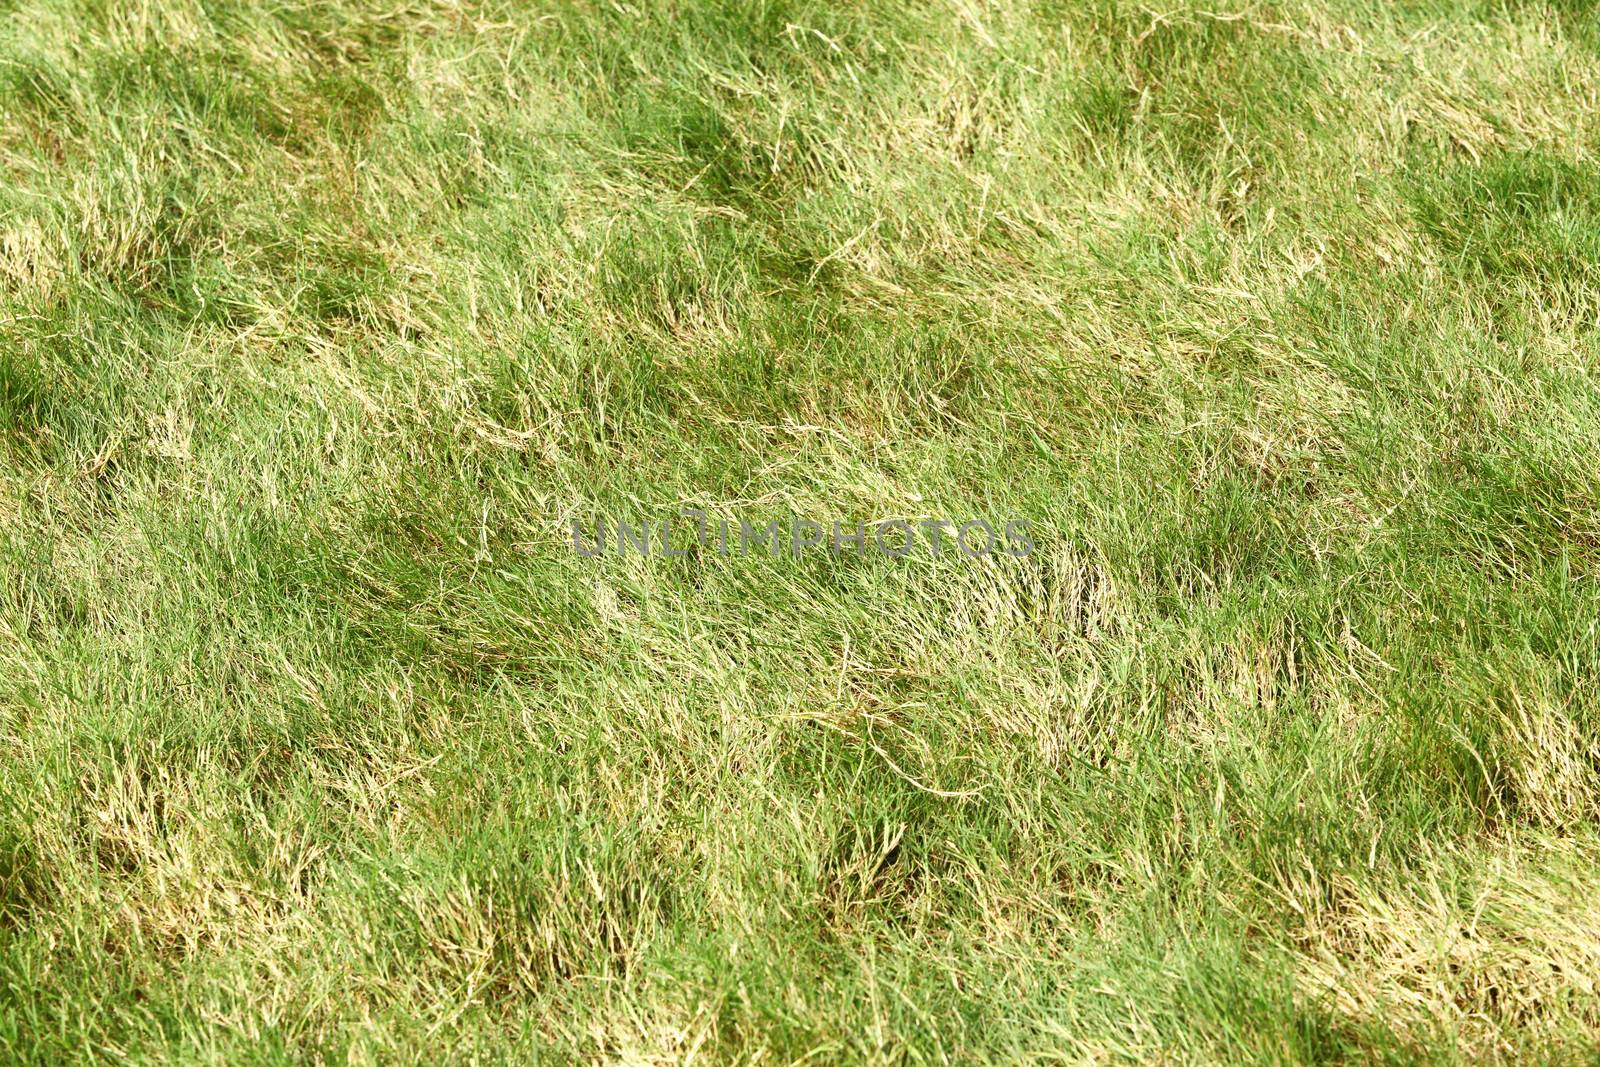 Rough grass in golf course